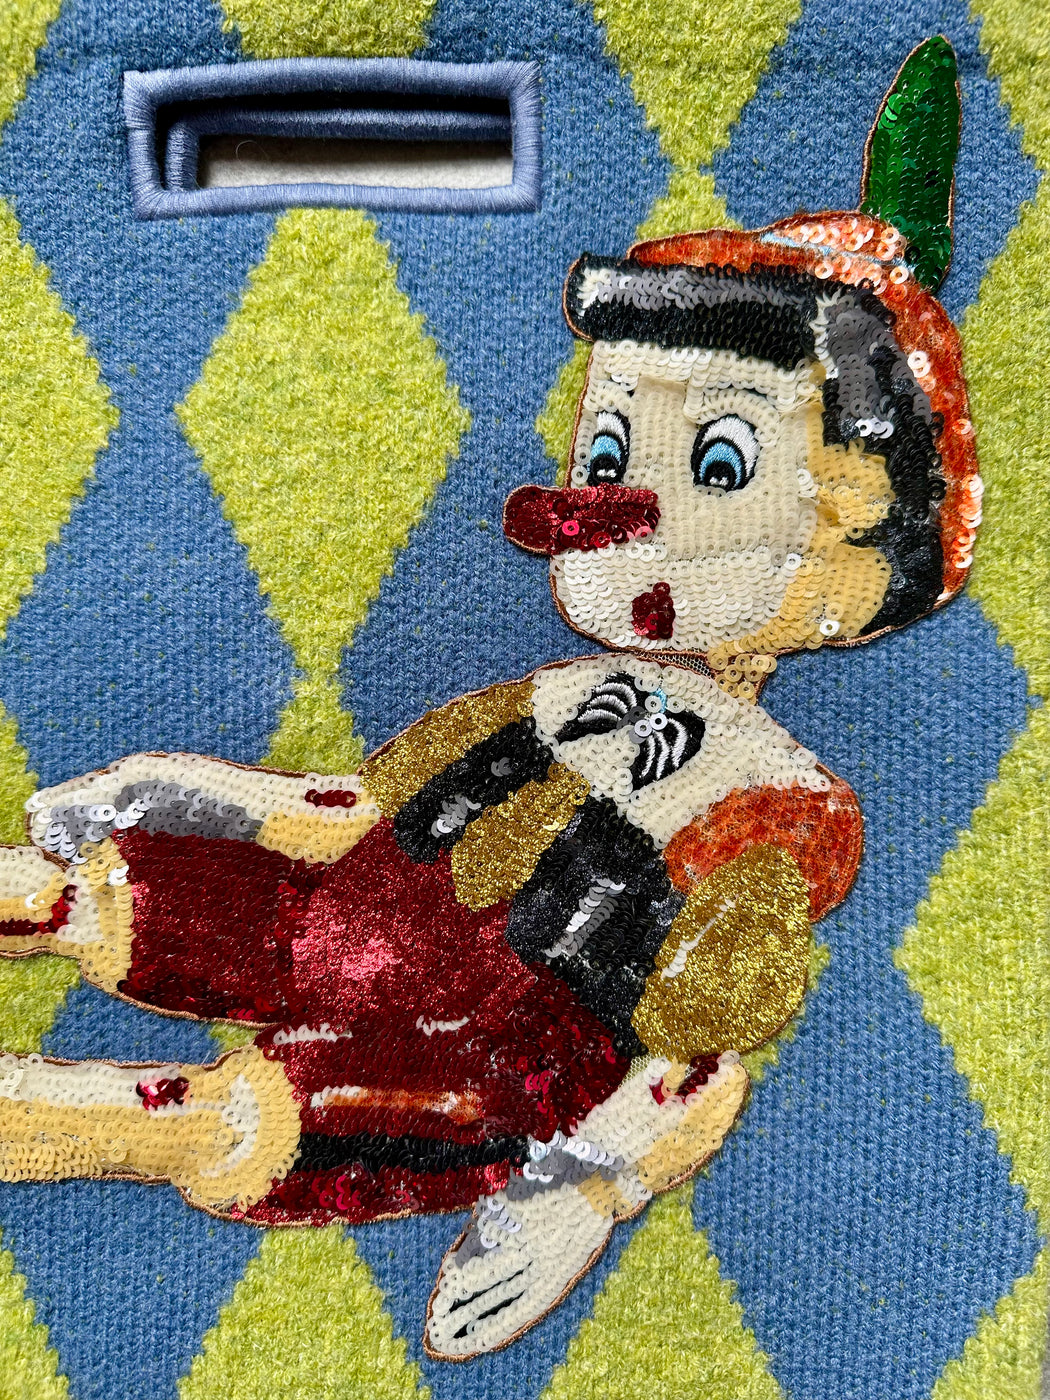 "Pinocchio" Knitting Bag by Timmy Tan